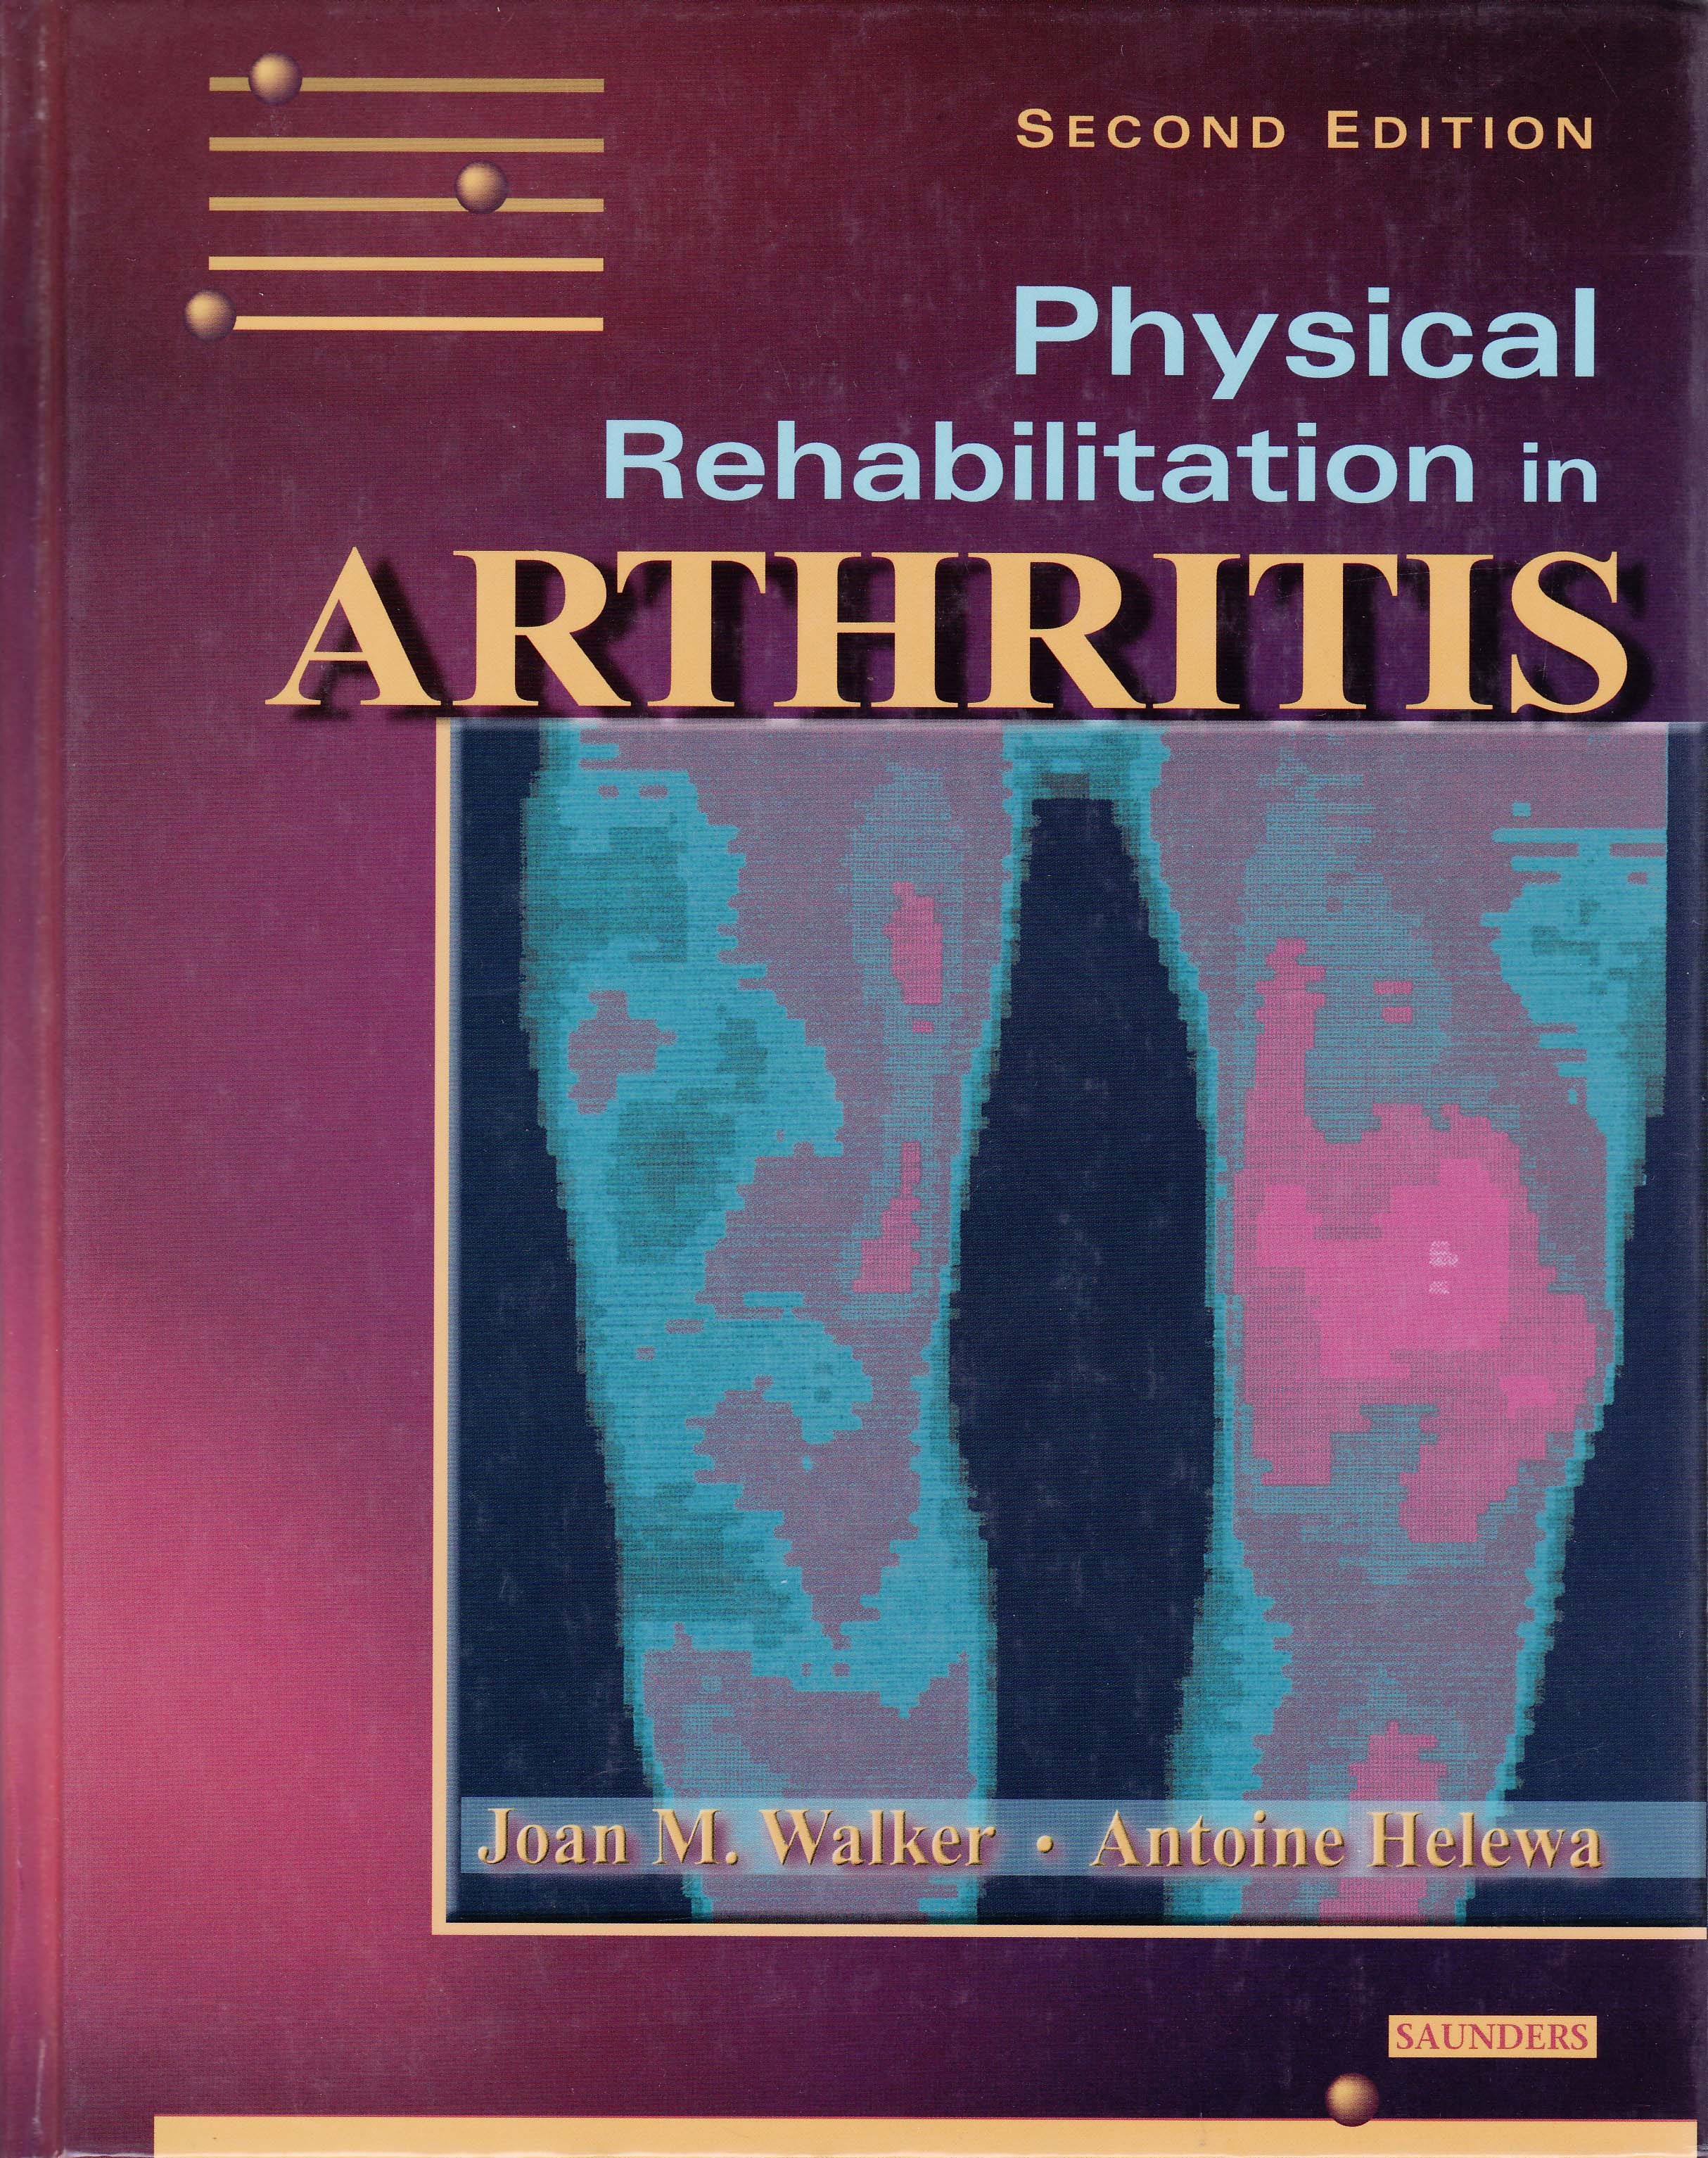 Share A Course: Physical Rehabilitation in Arthritis: Module 2